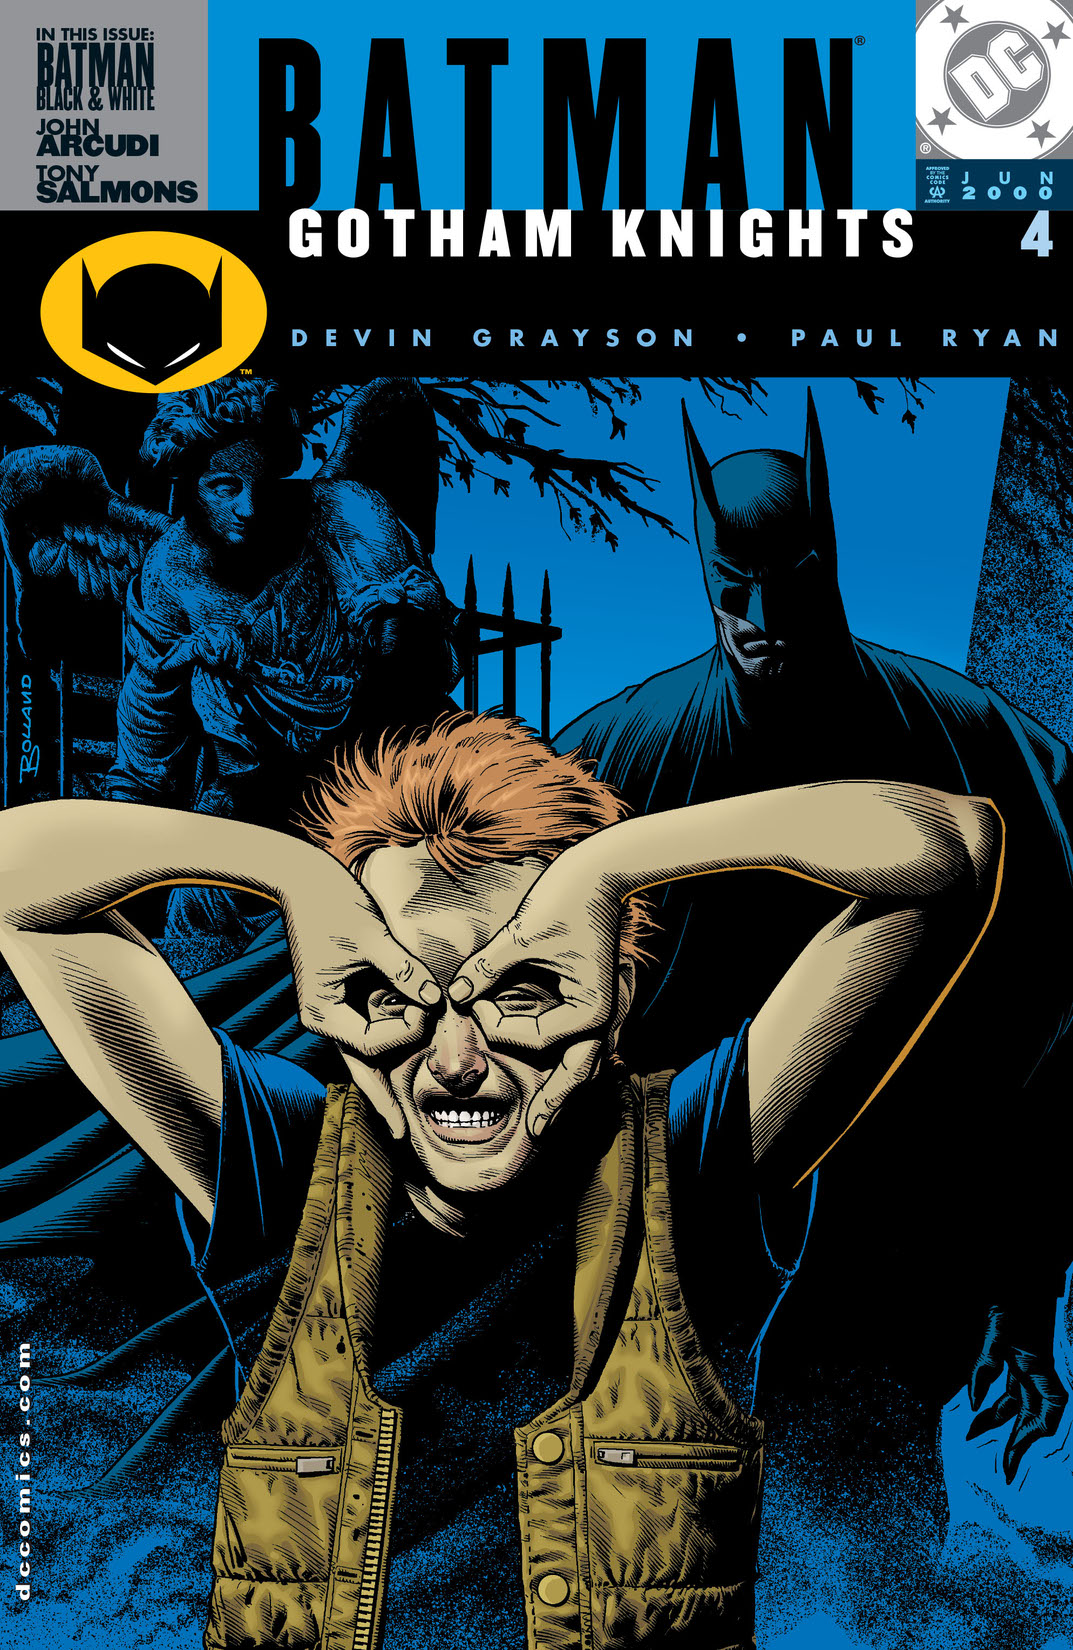 Batman: Gotham Knights #4 preview images